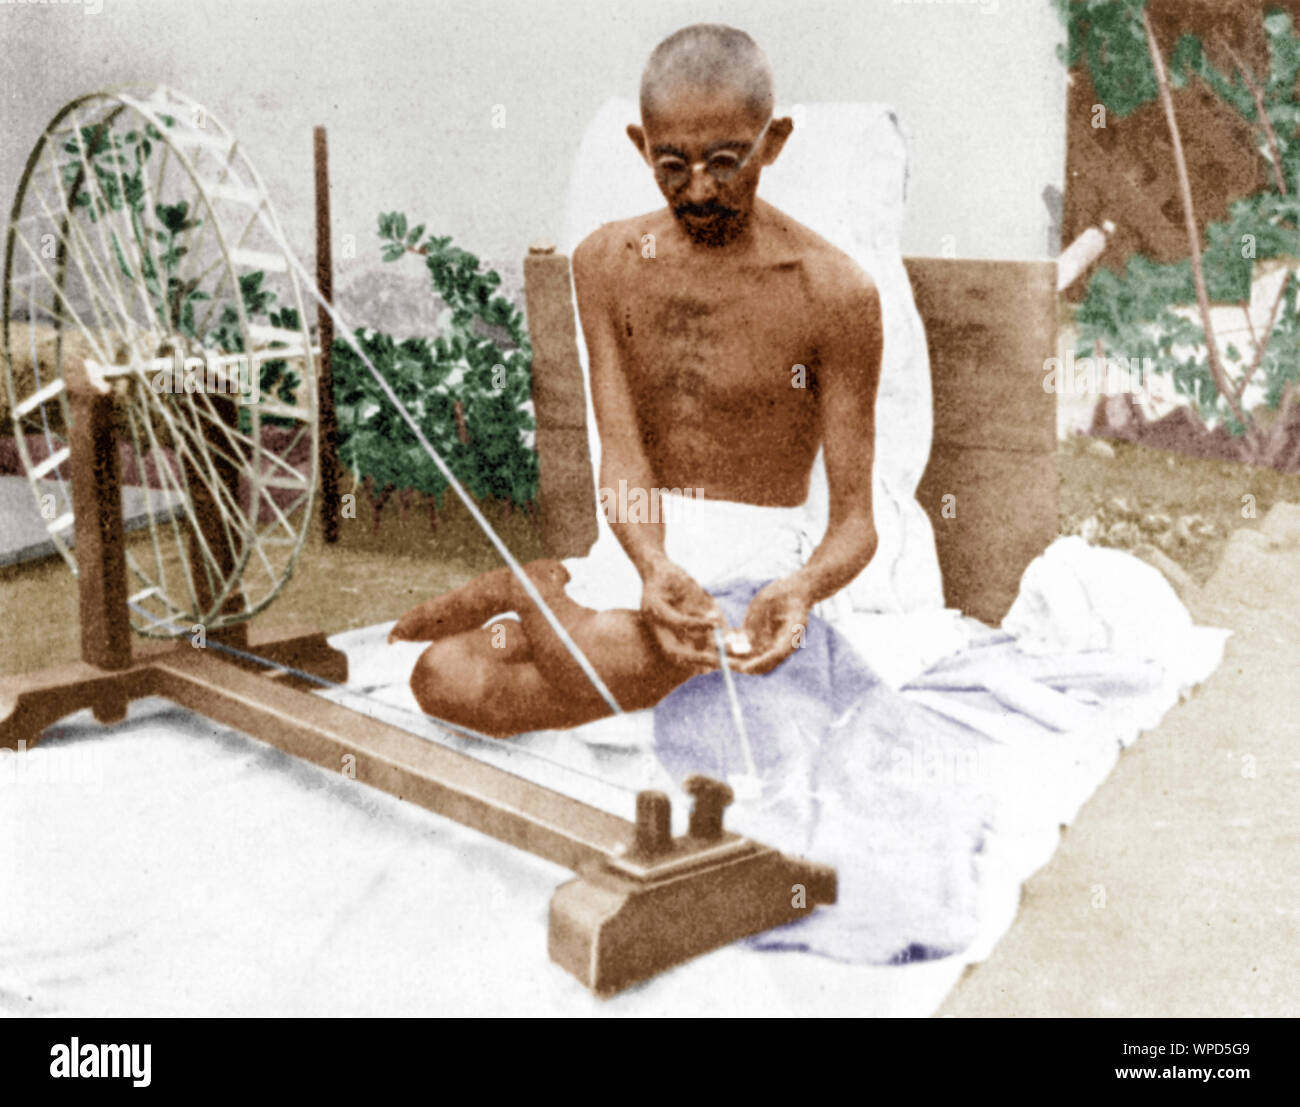 Mahatma Gandhi Ji Ka Photo